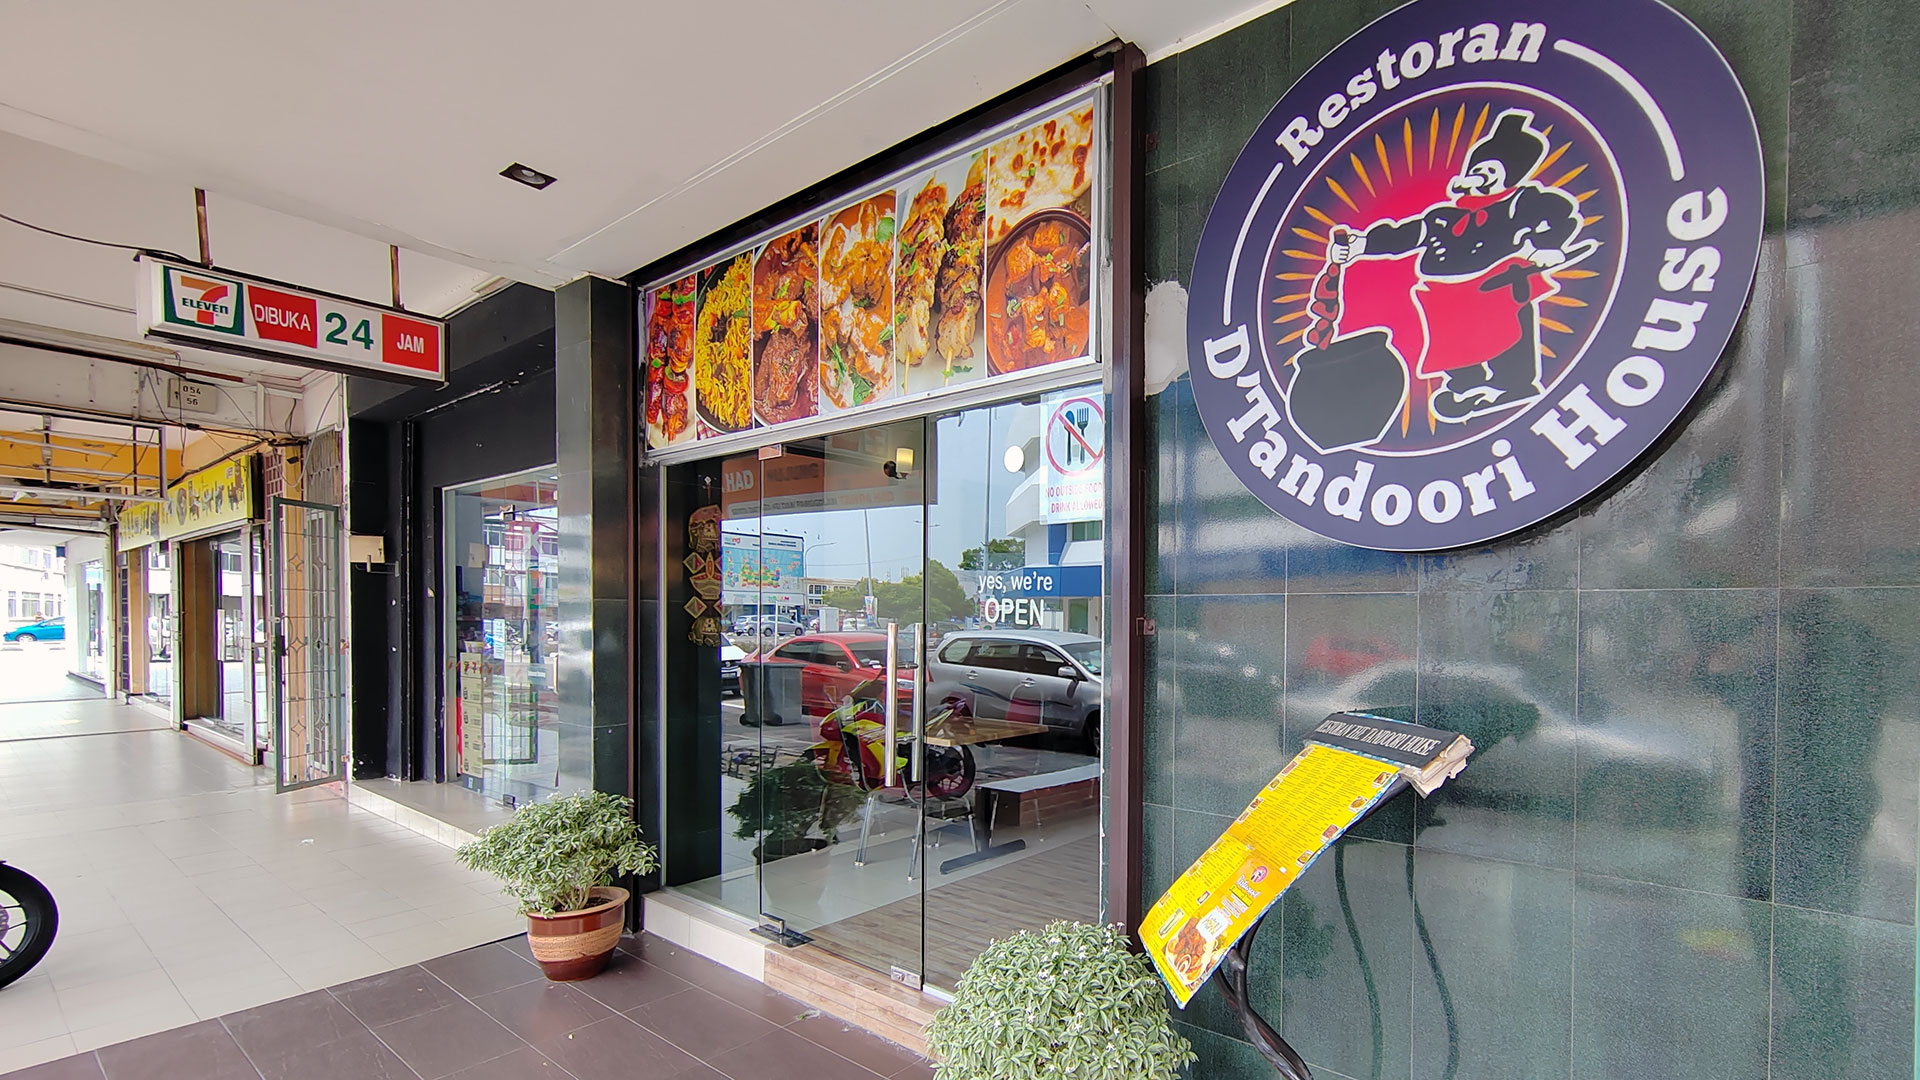 D Tandoori House Northern Indian cuisine Established in 1992.